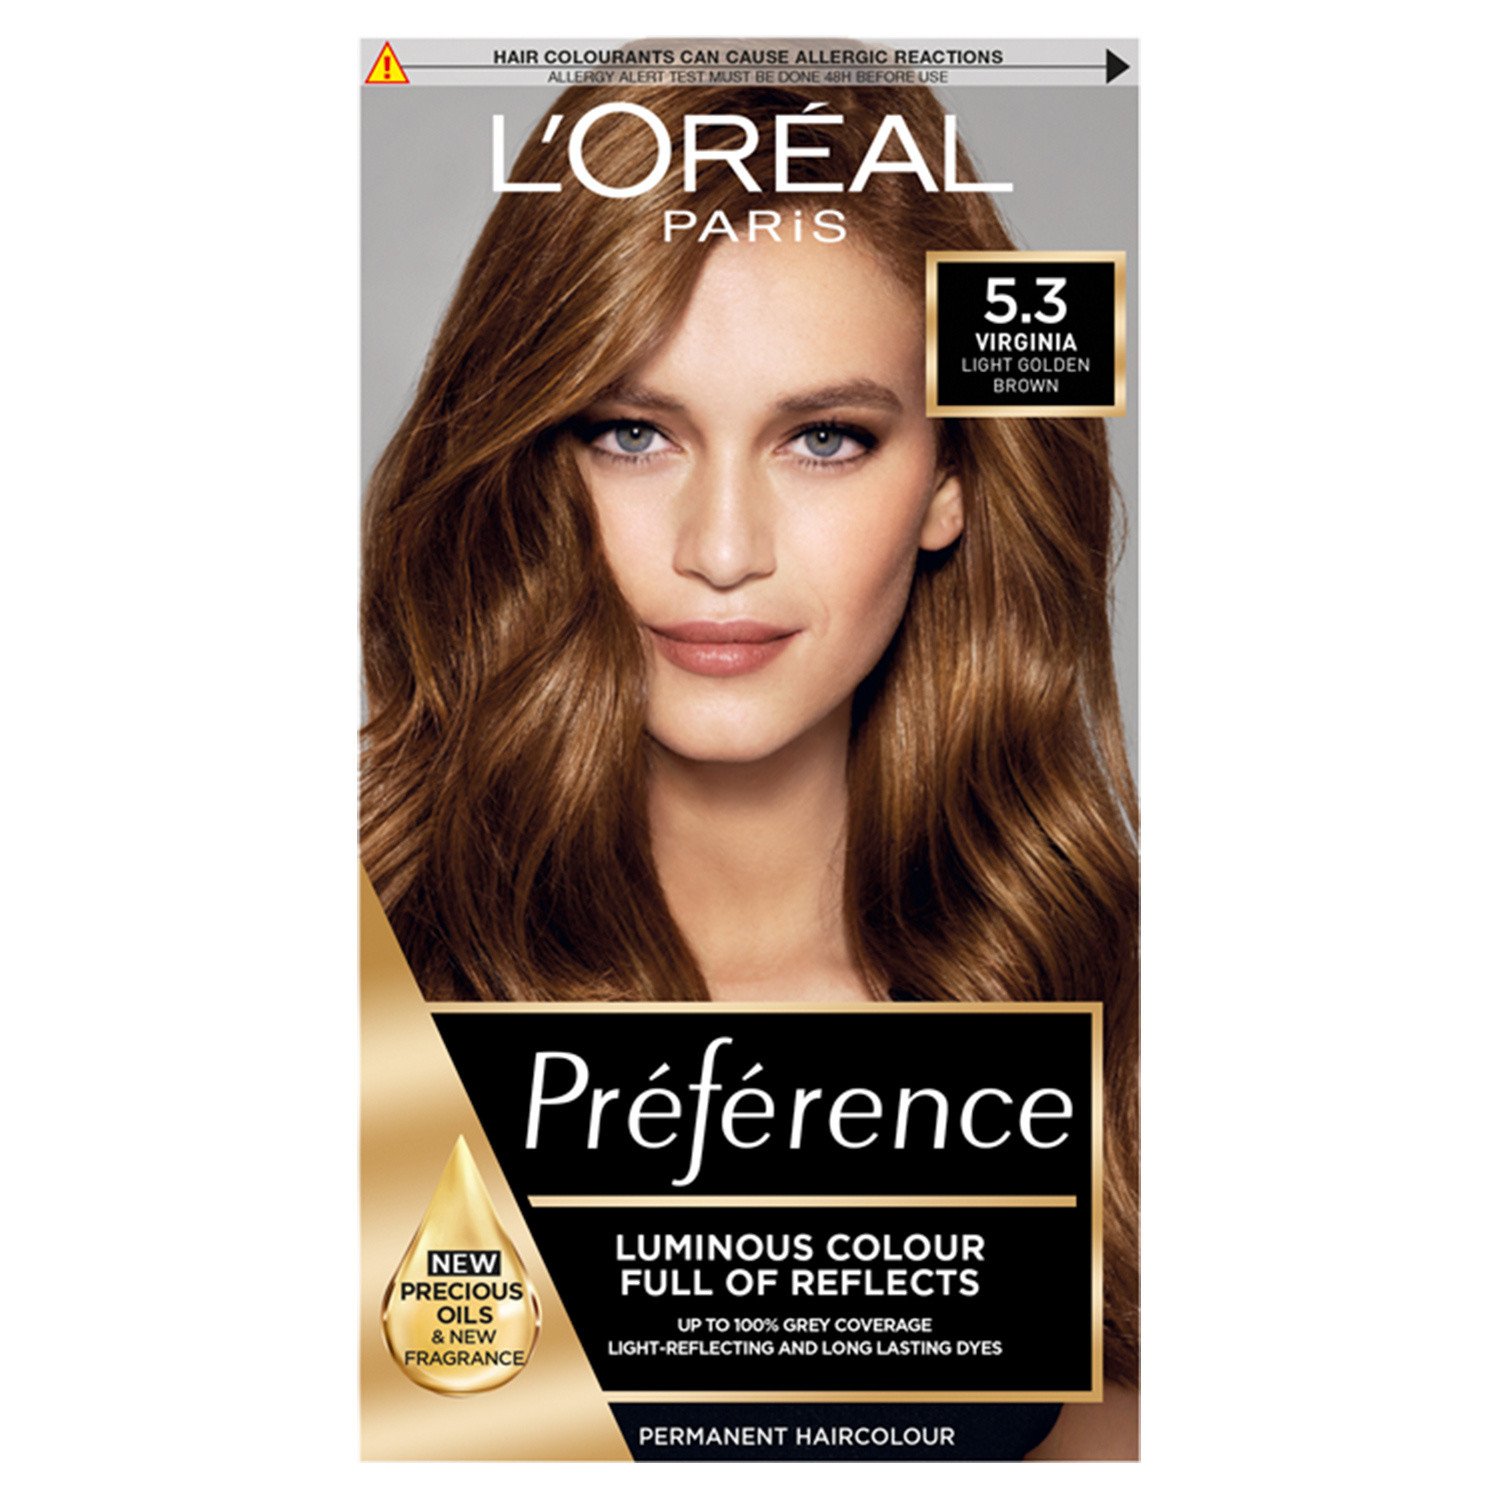 L'Oréal Paris Préférence Infinia Hair Dye (Various Shades) - 5.3 Virginia Chestnut Brown